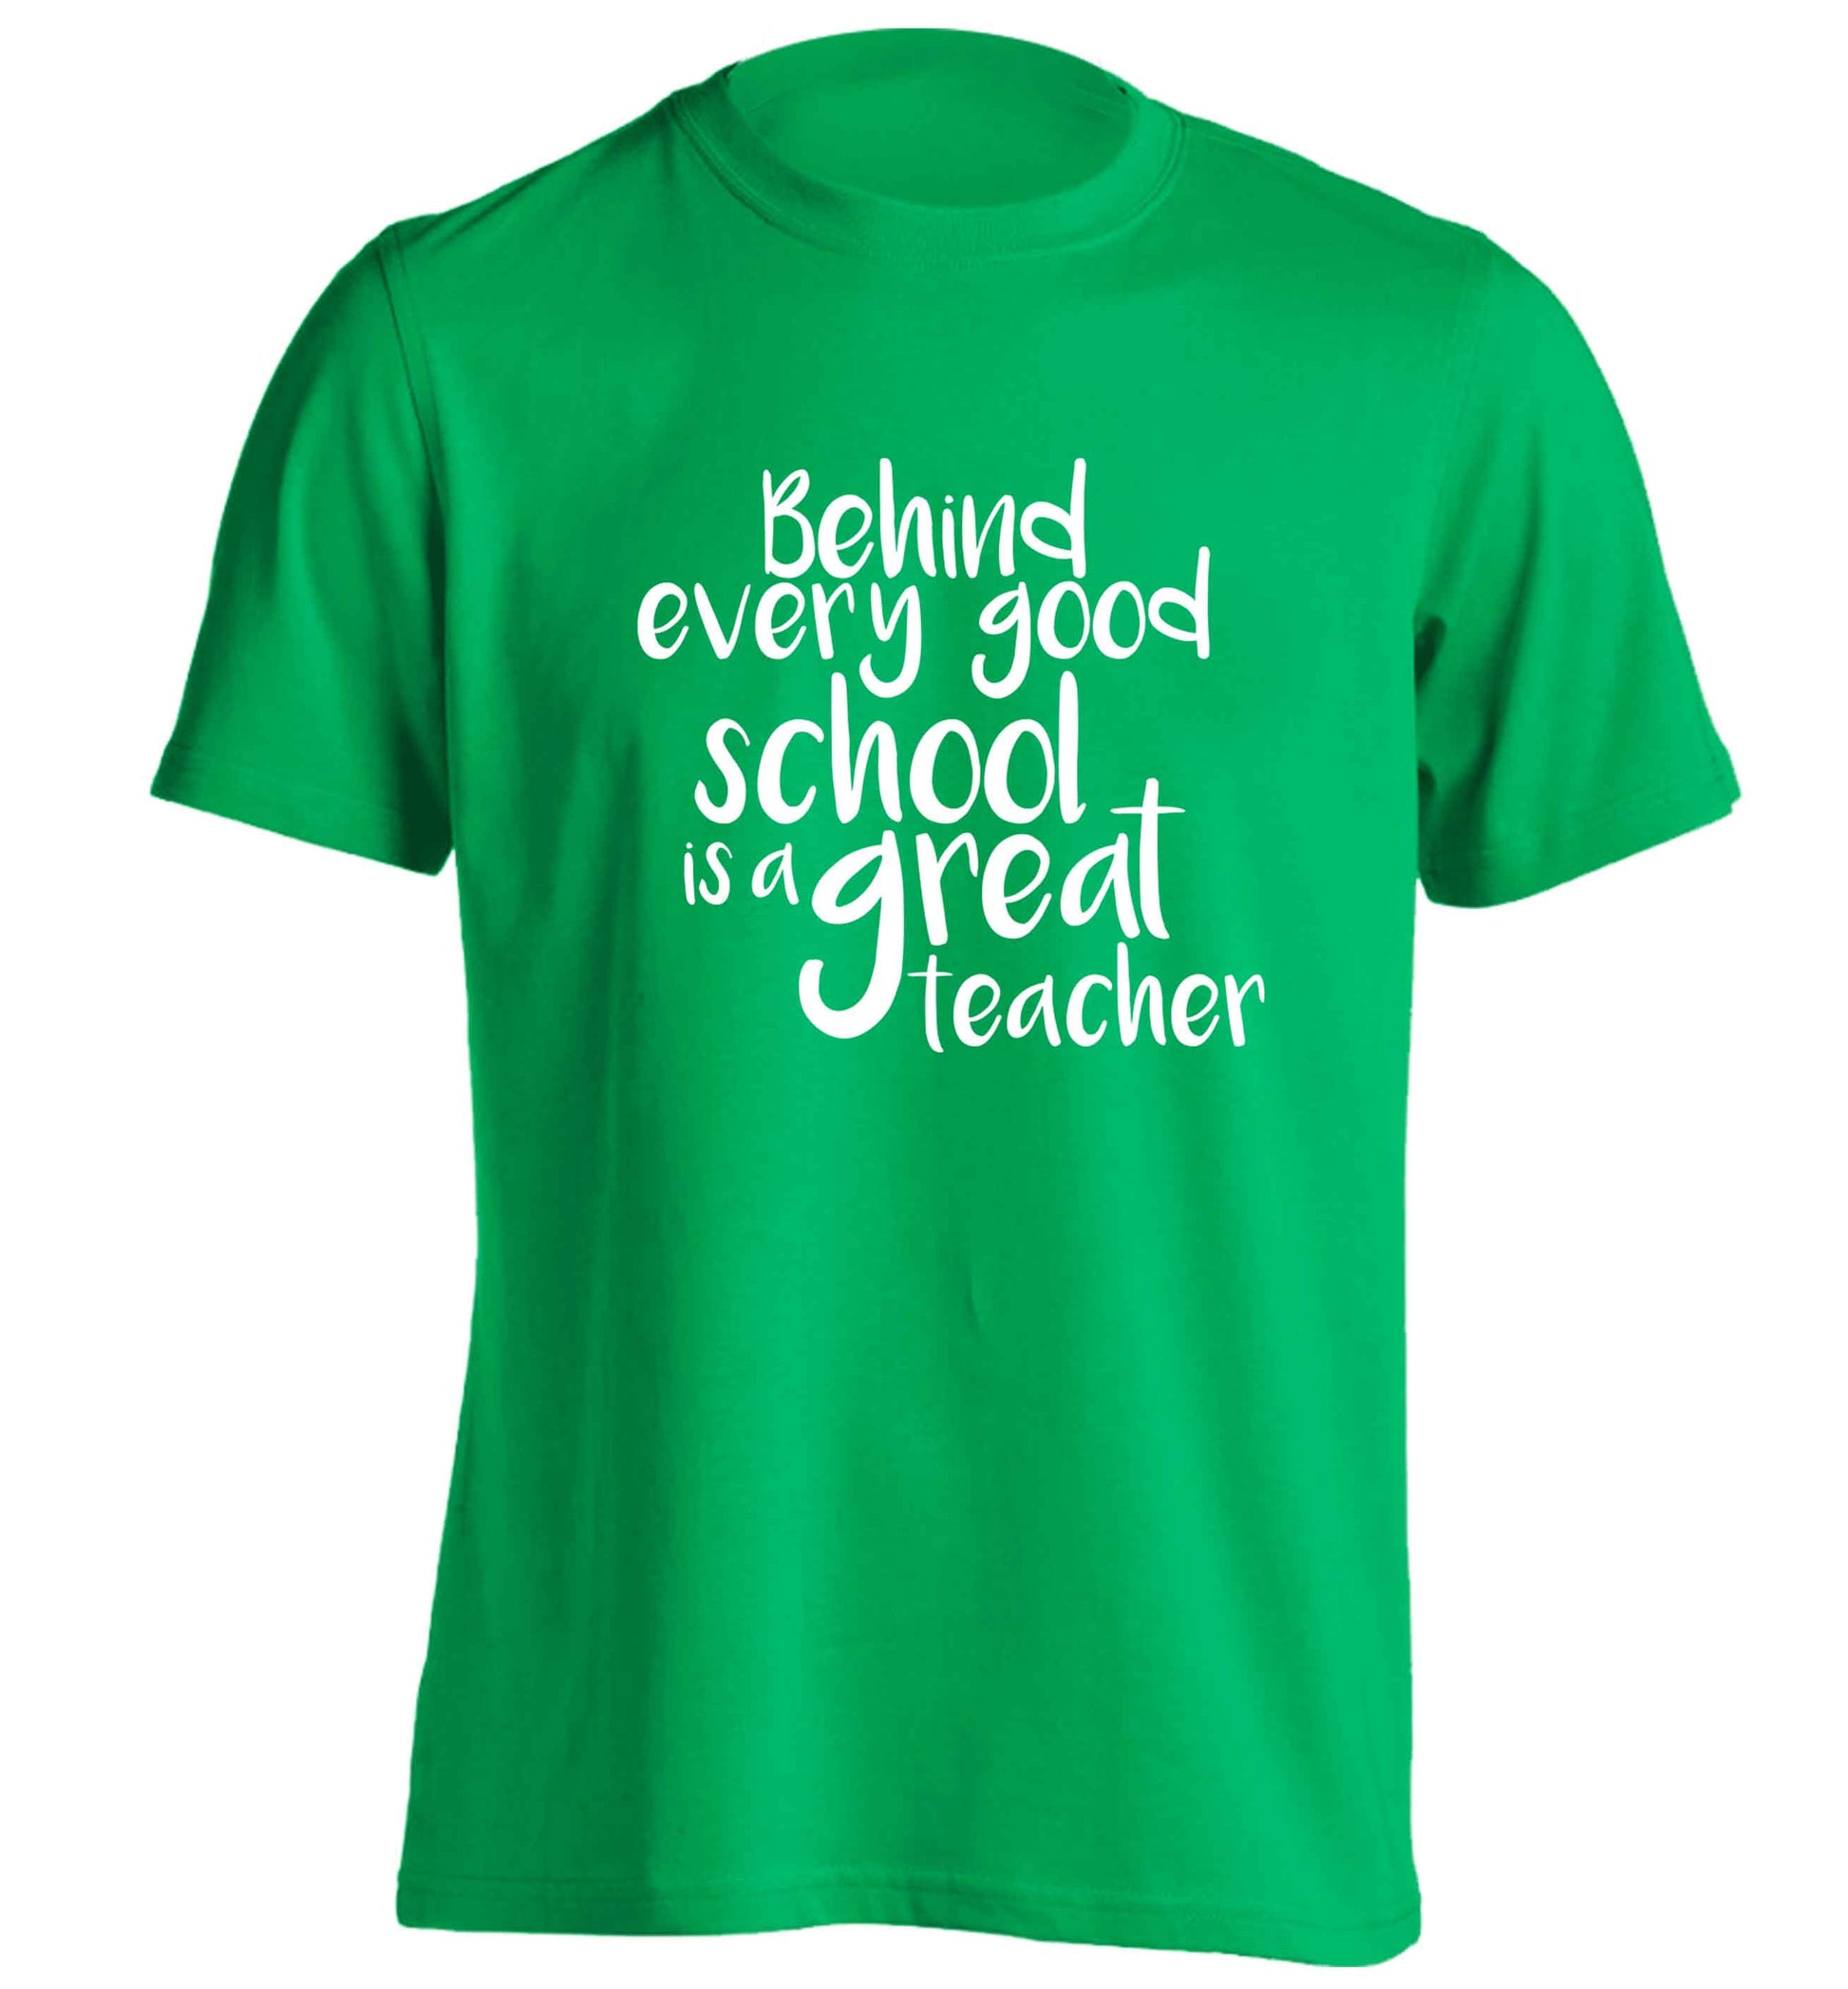 Behind every good school is a great teacher adults unisex green Tshirt 2XL